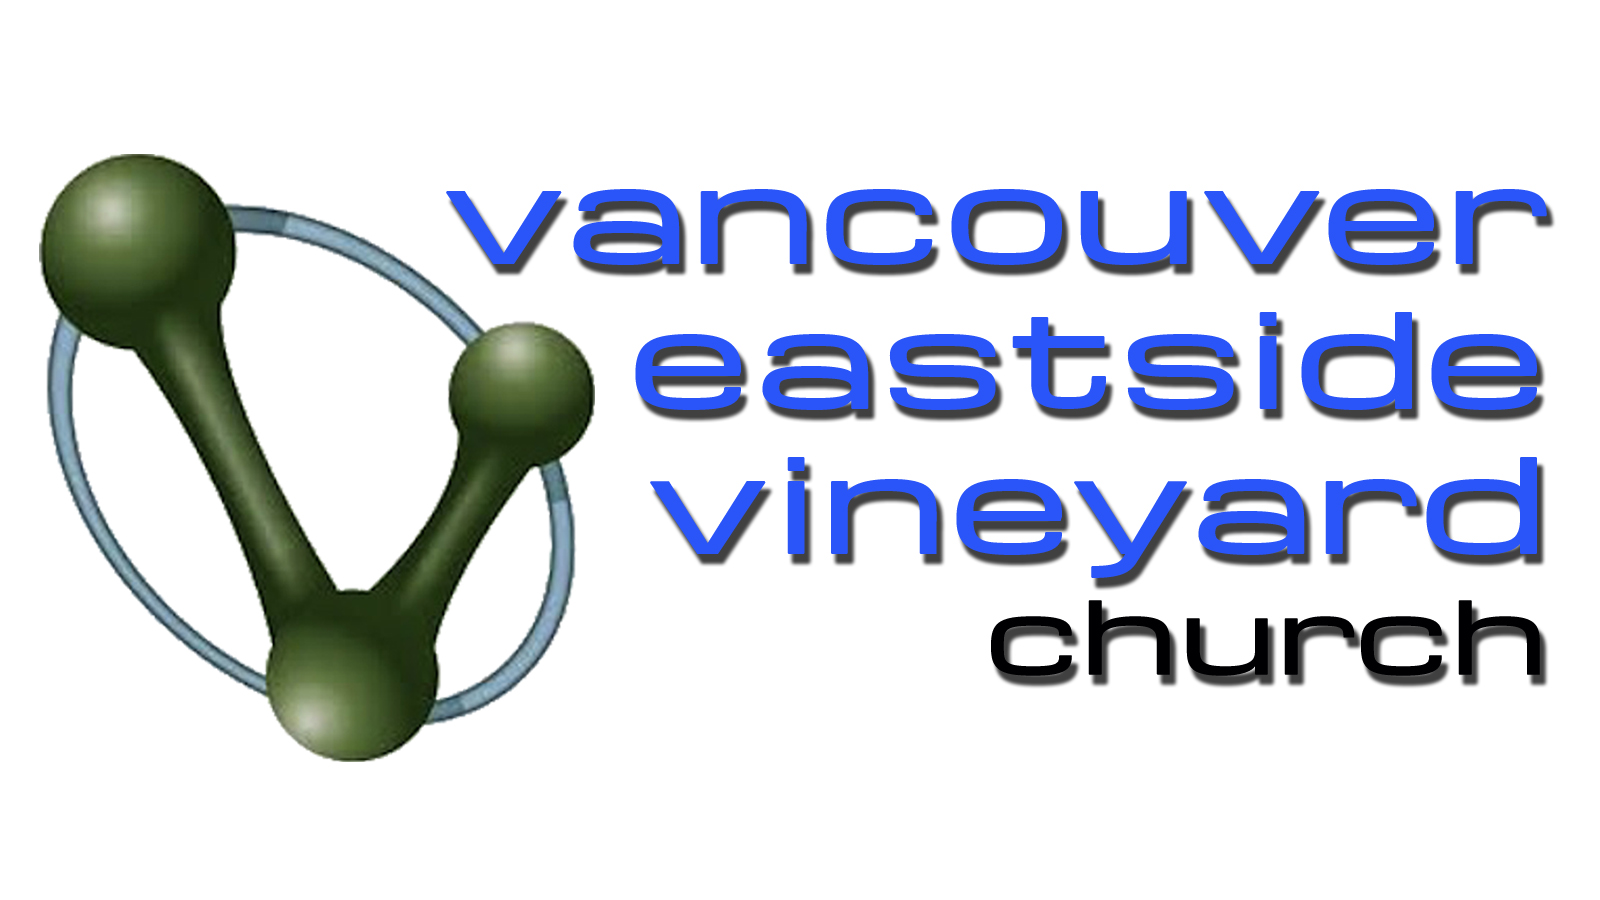 Vancouver Eastside Vineyard Church